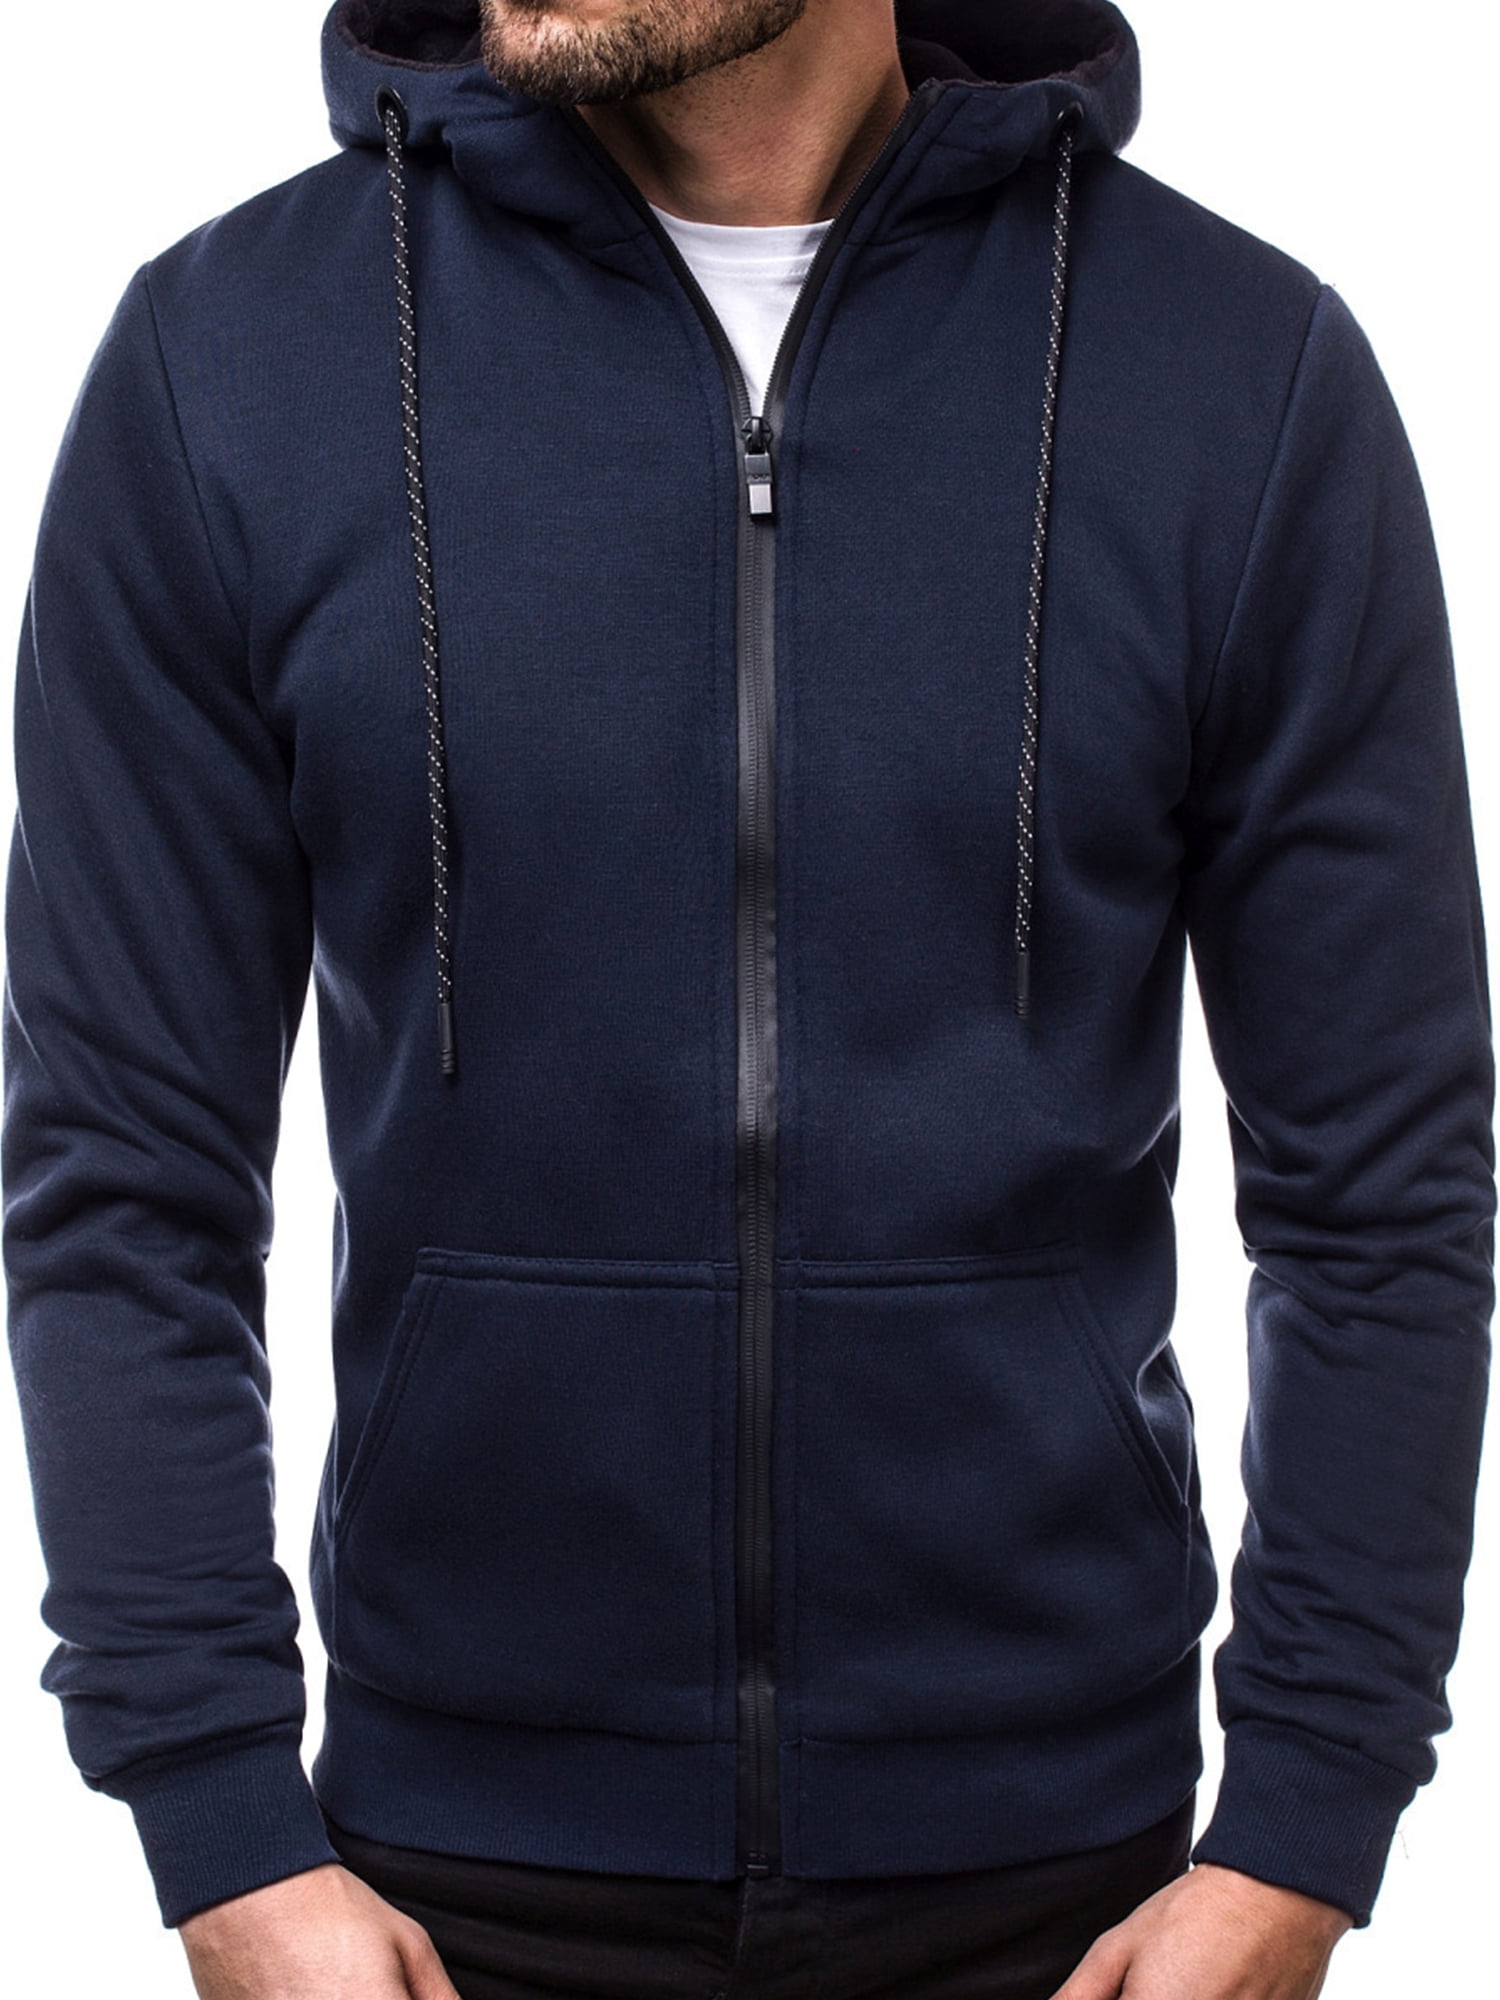 Hoody Tops Solid Sweatshirts Jacket Fashion Hoodie Fleeces Winter Sweater Men's